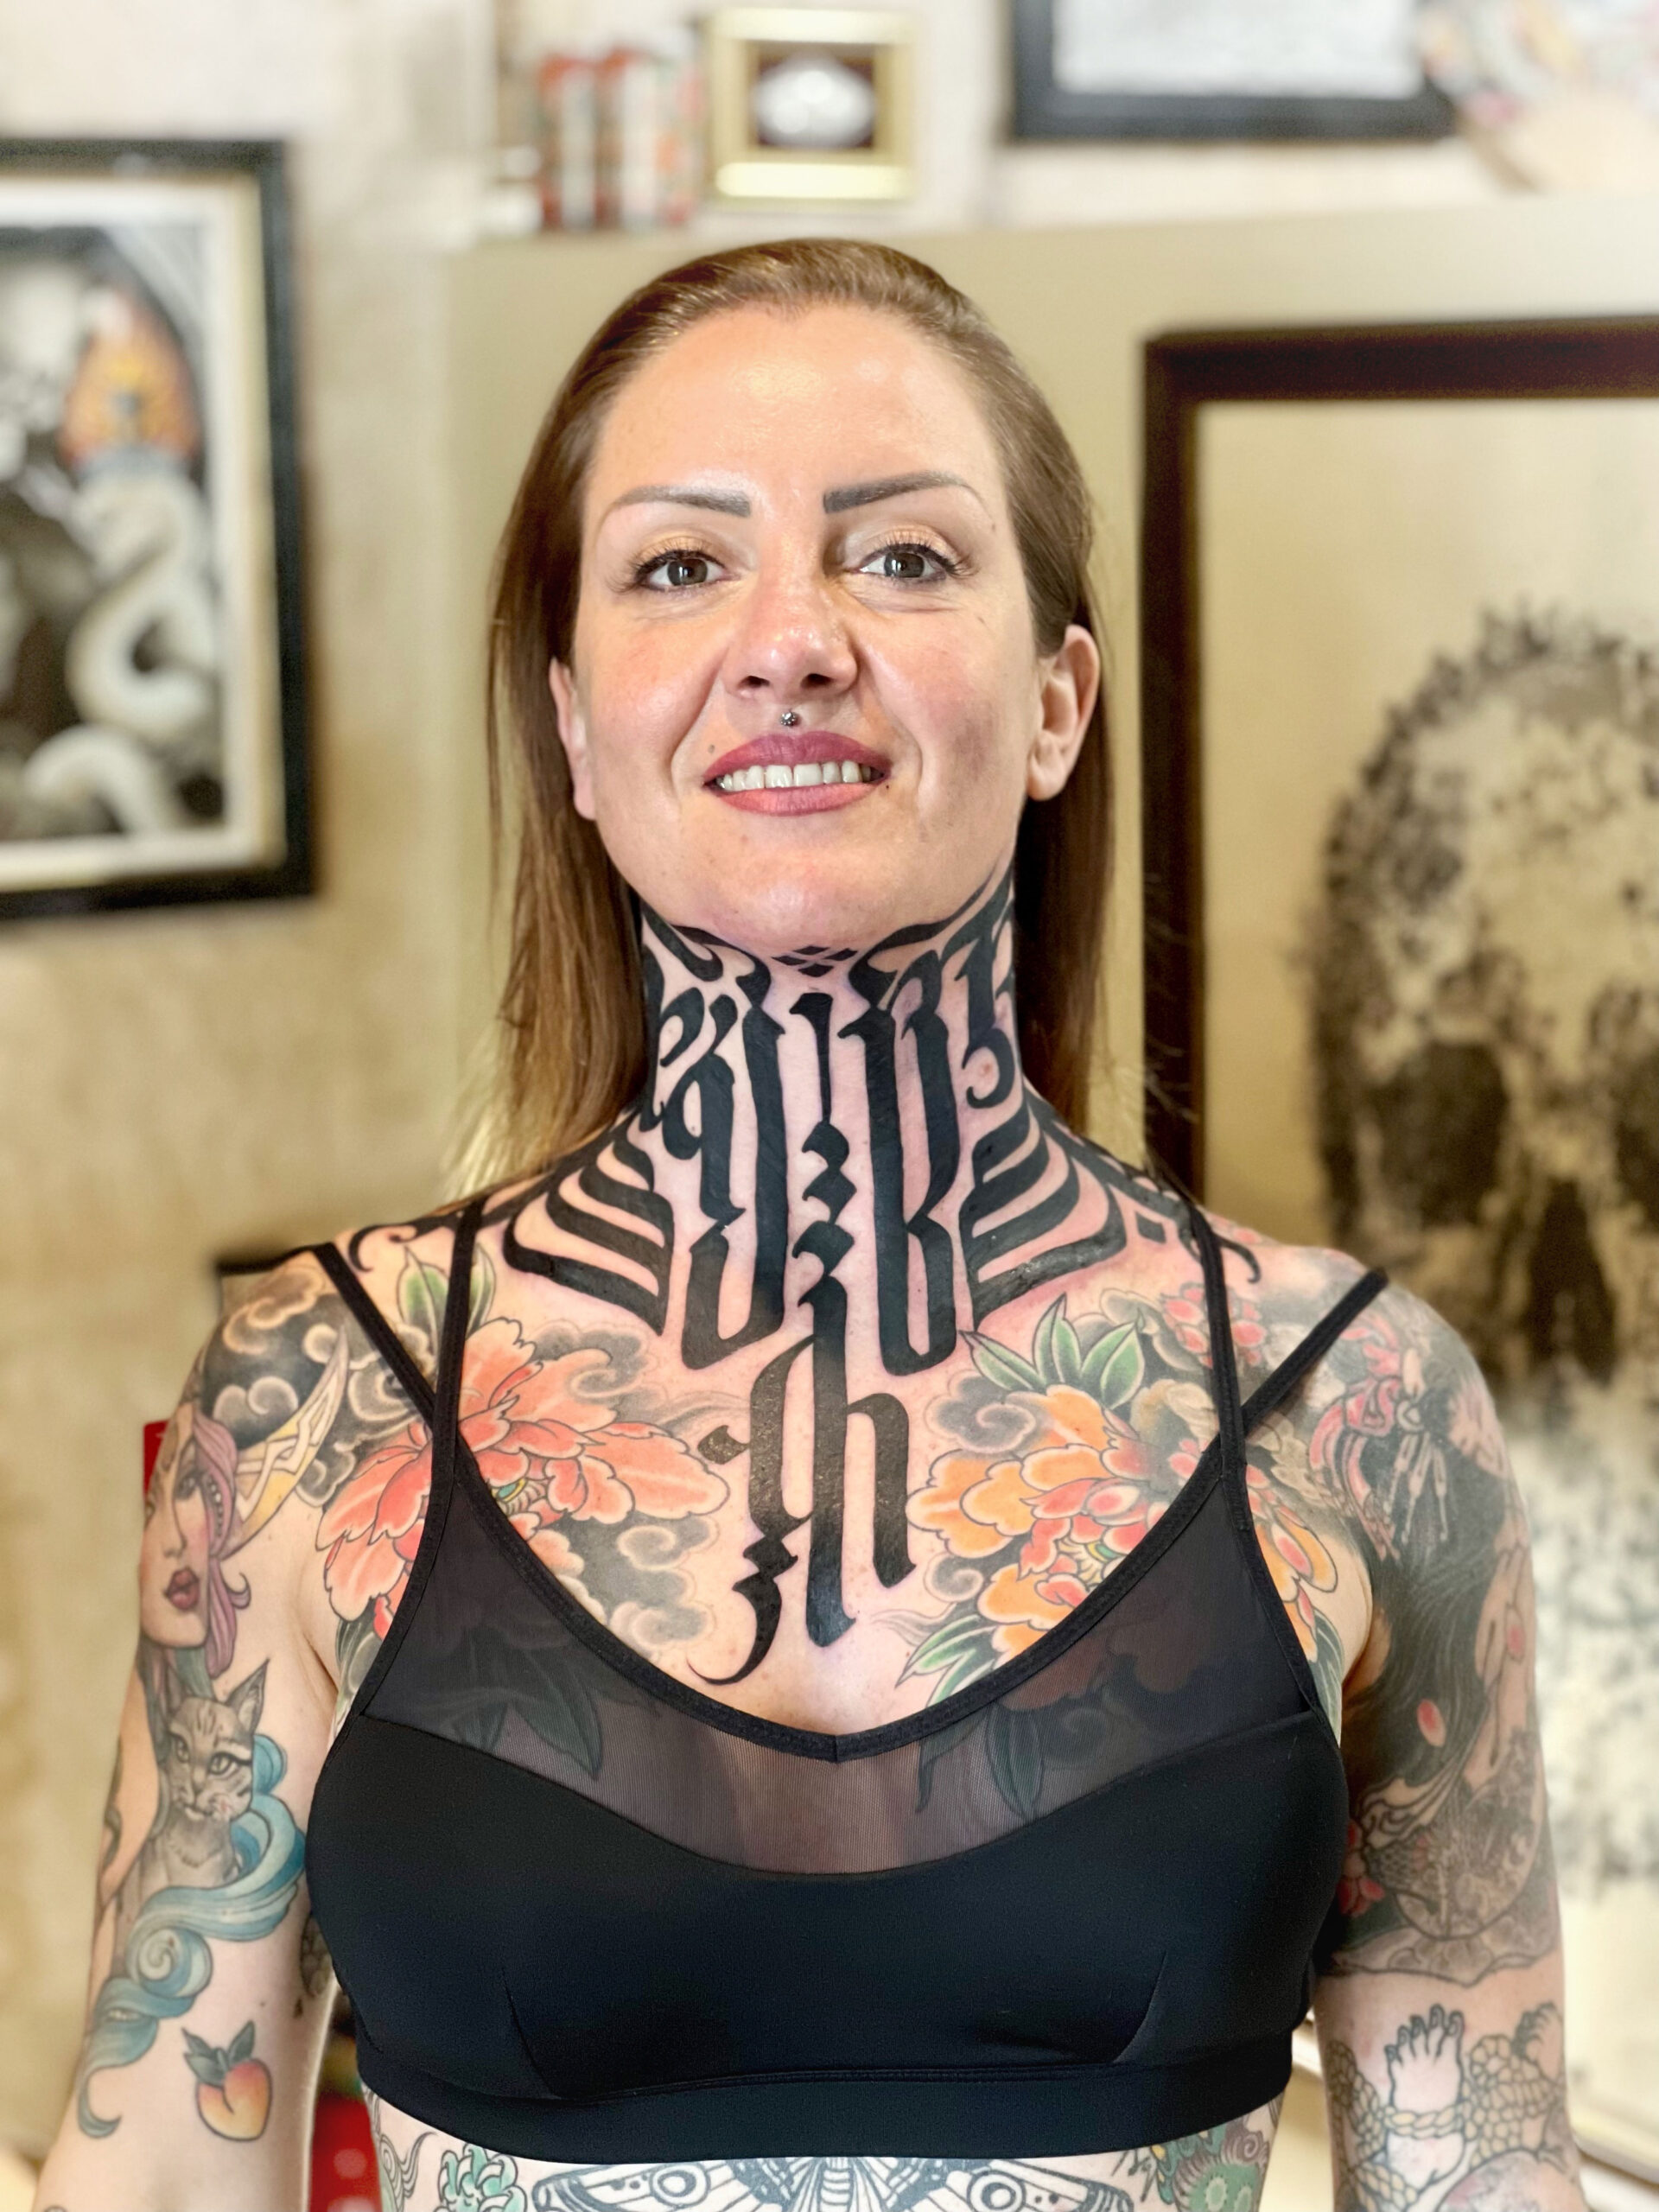 Symmetrical neck tattoo with flowers  Neck tattoo Flower tattoos  Polynesian tattoo